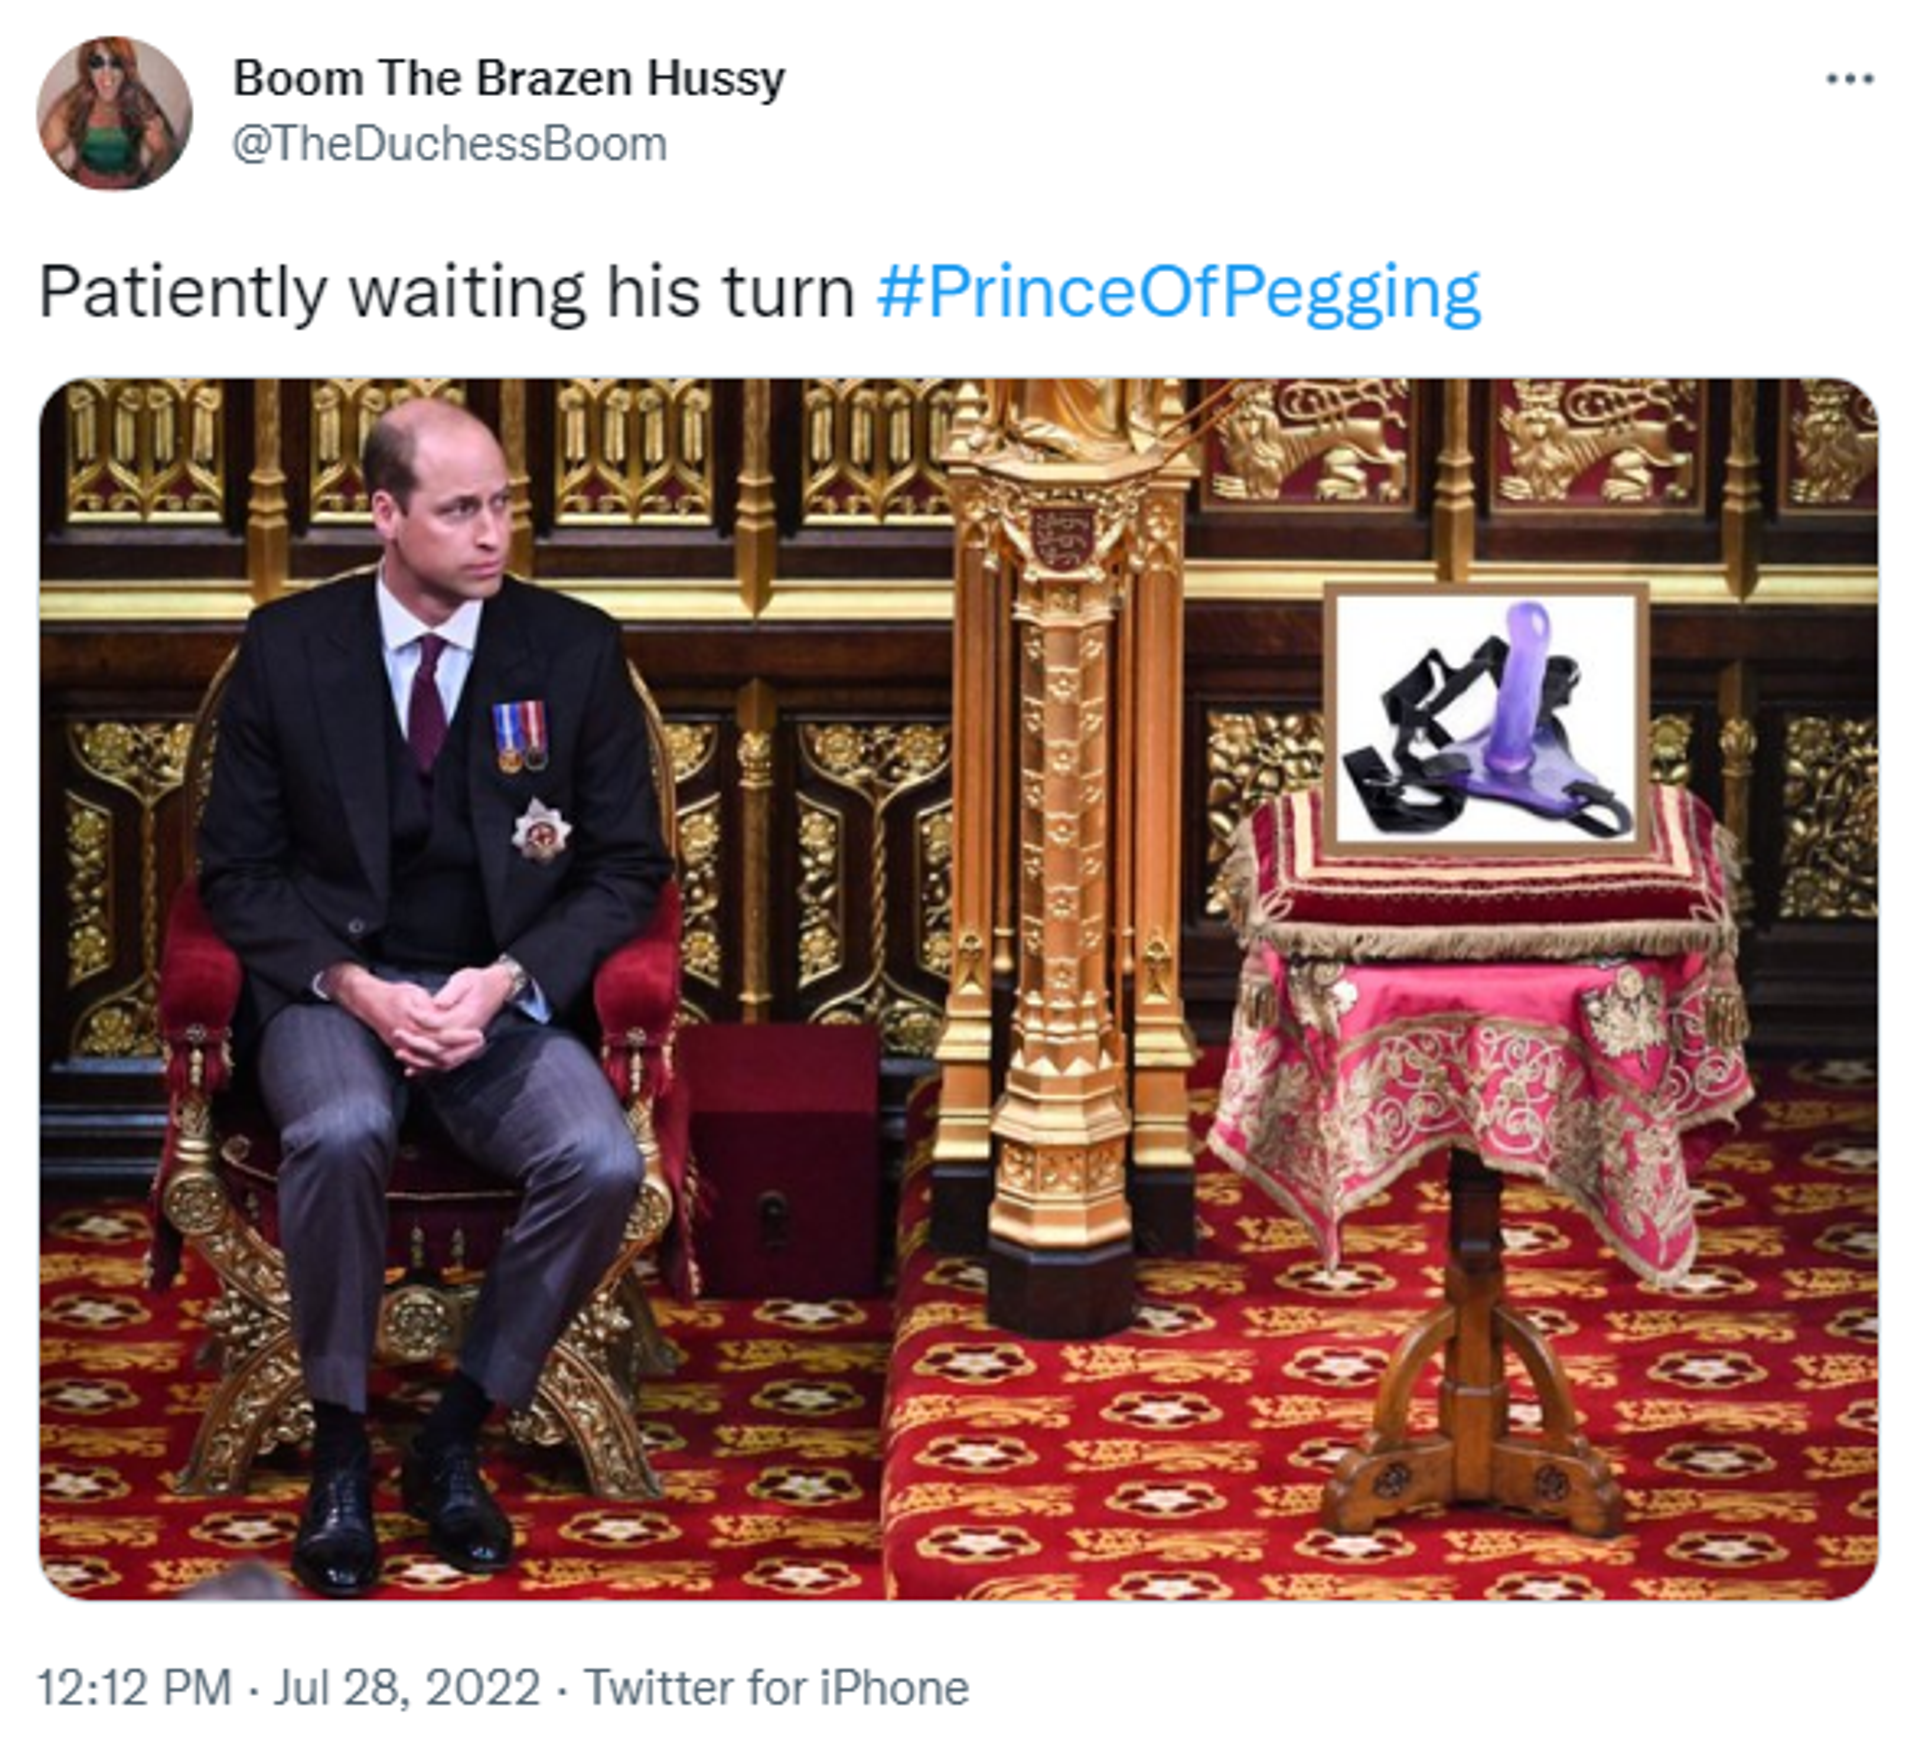 Tweet ridiculing Prince William over the #PrinceOfPegging hashtag - Sputnik International, 1920, 28.07.2022